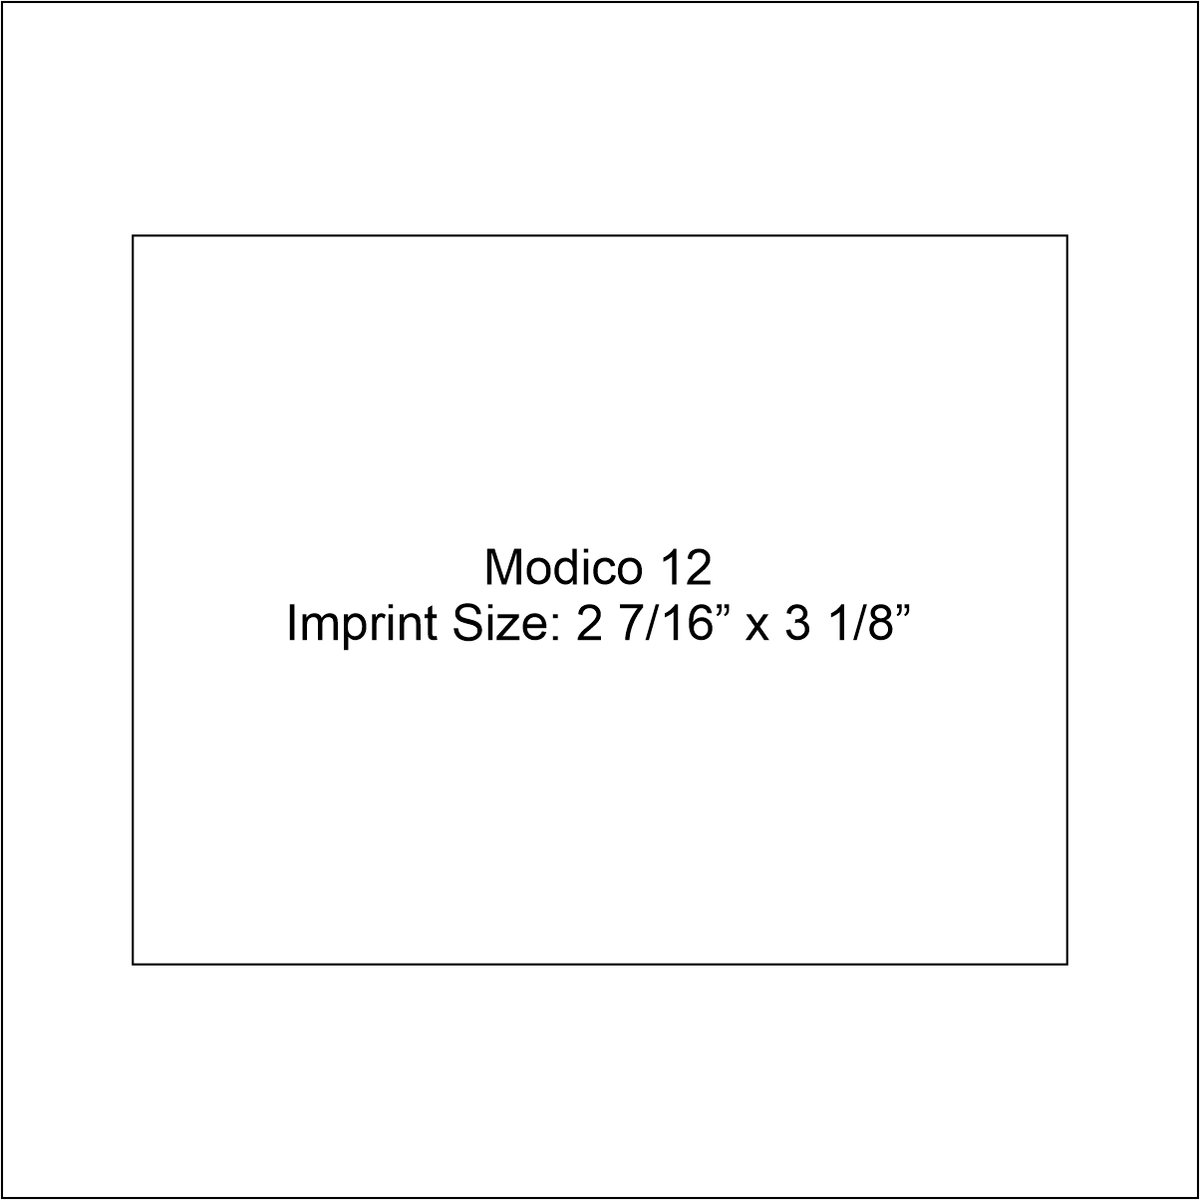 modico 12 stamp imprint size